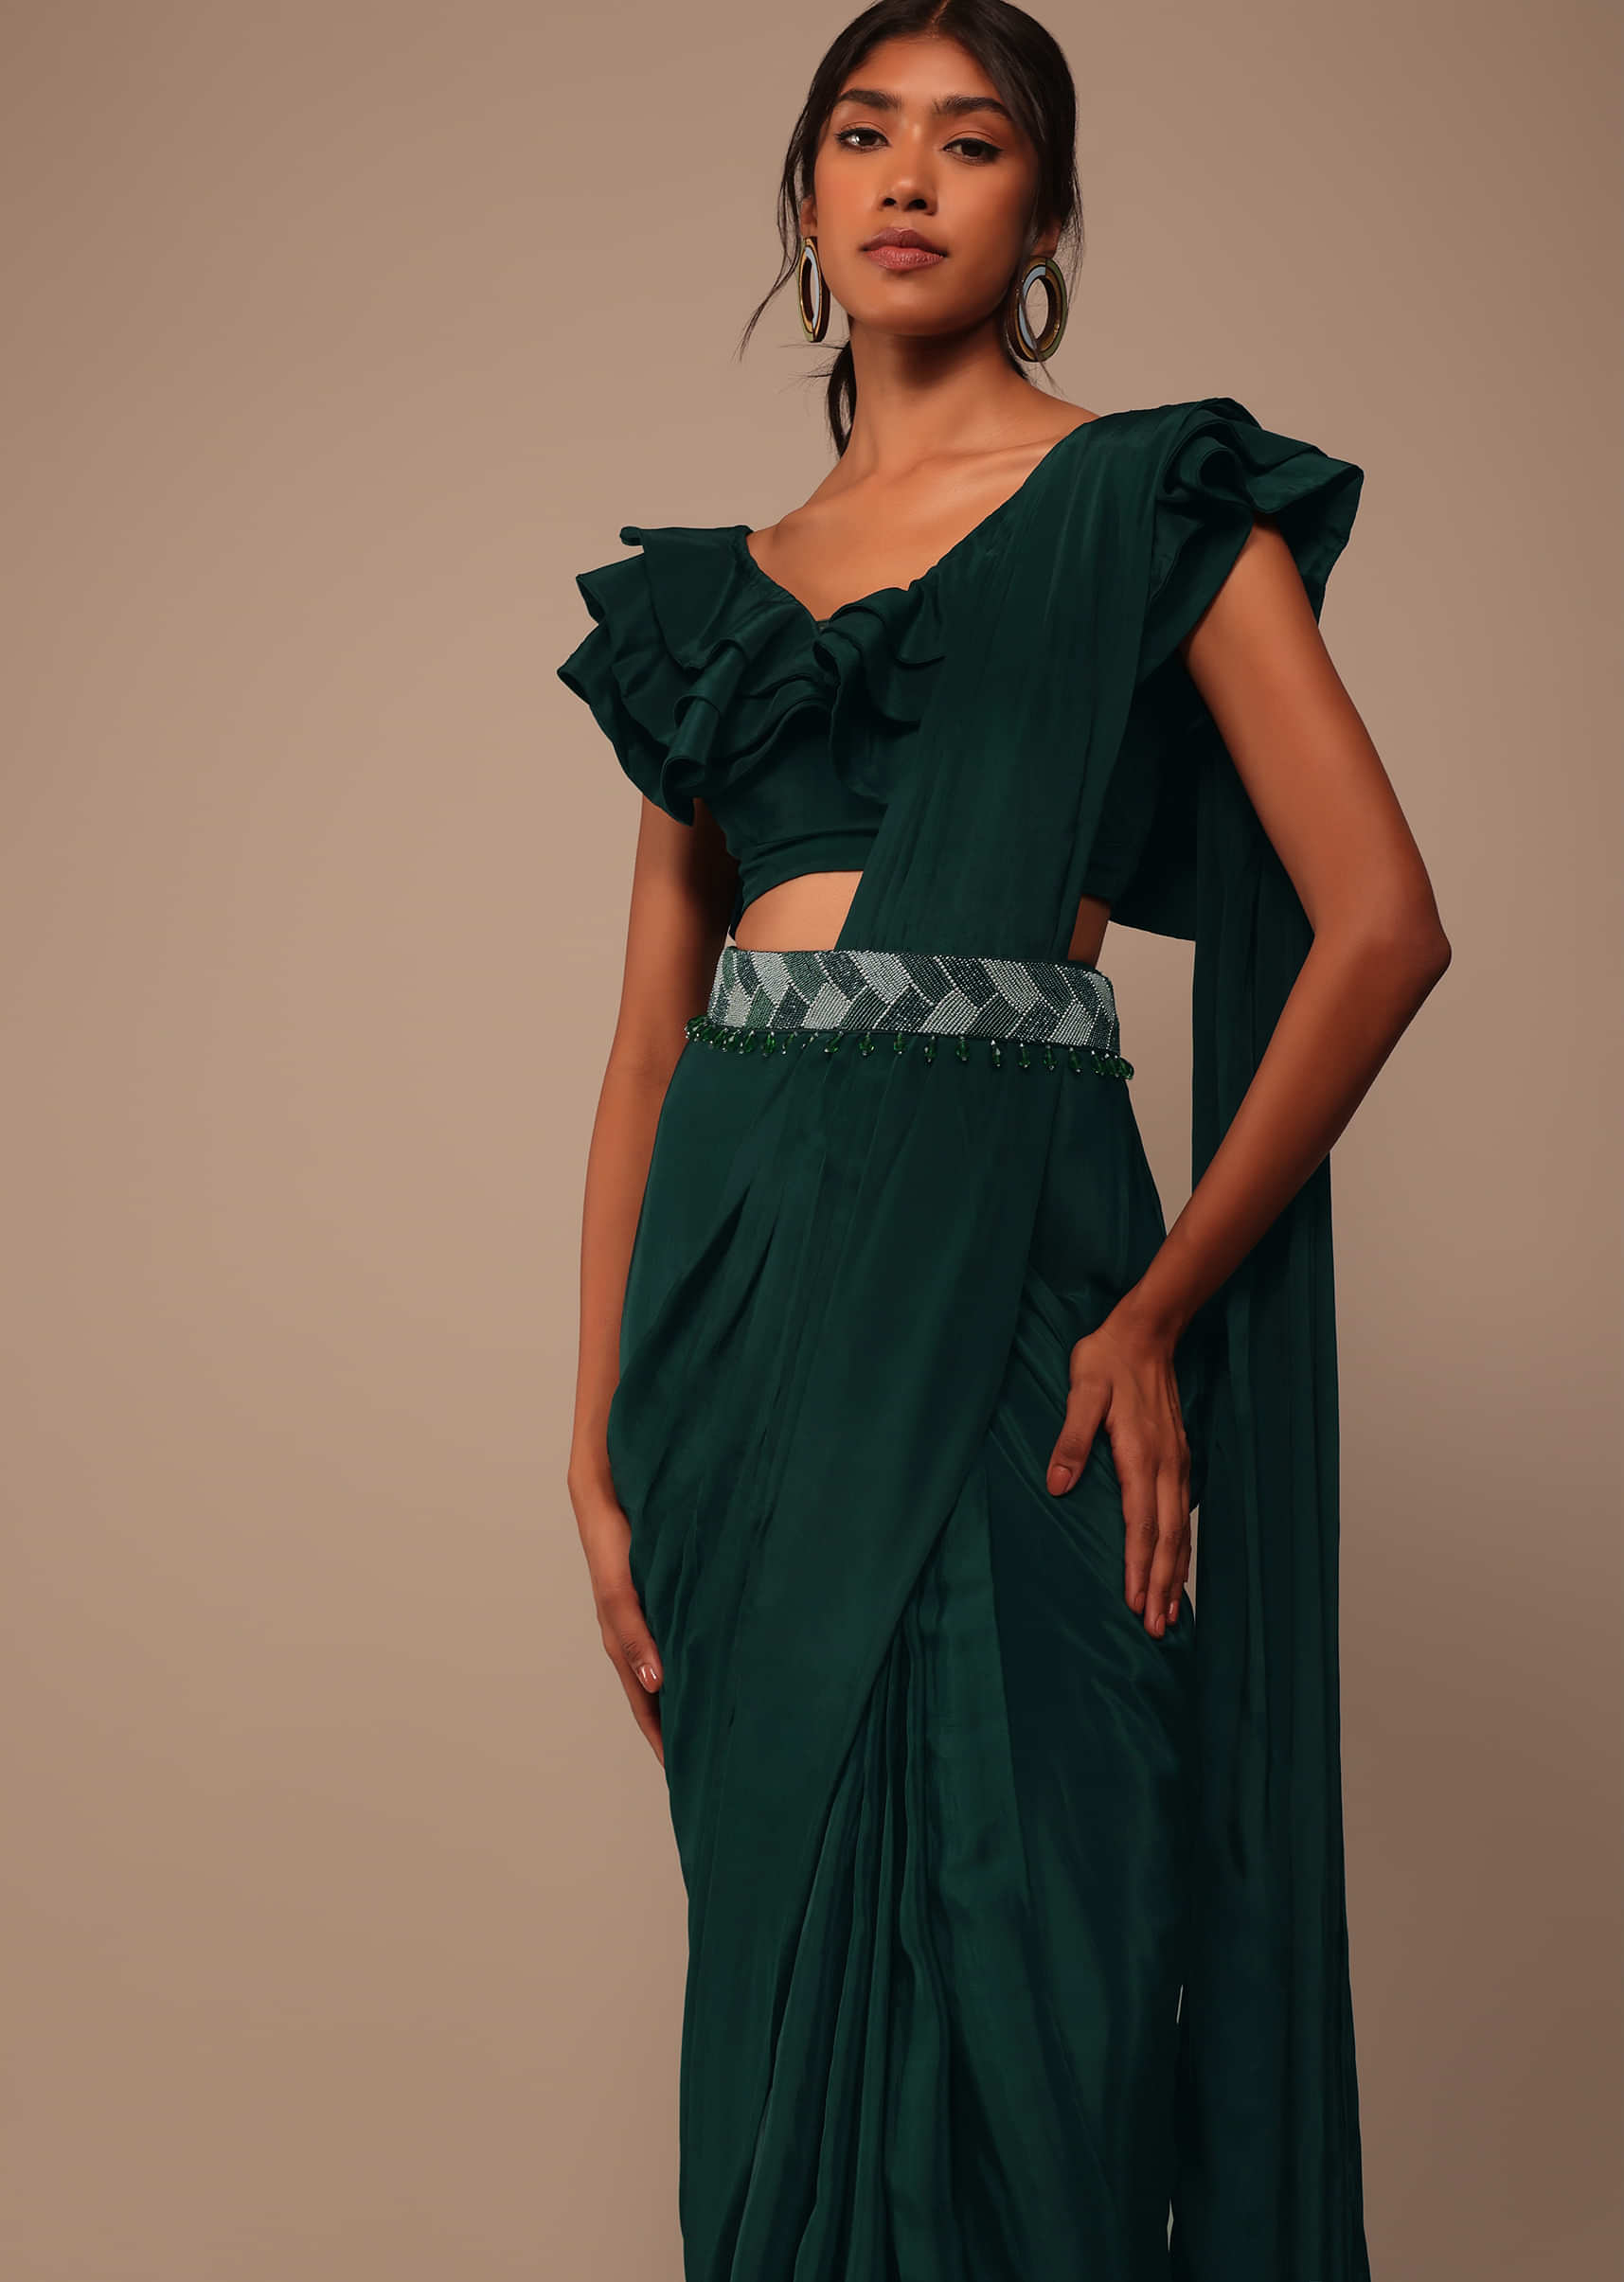 Shop Designer Indian Ethnic Luxury Fashion Wear for Women